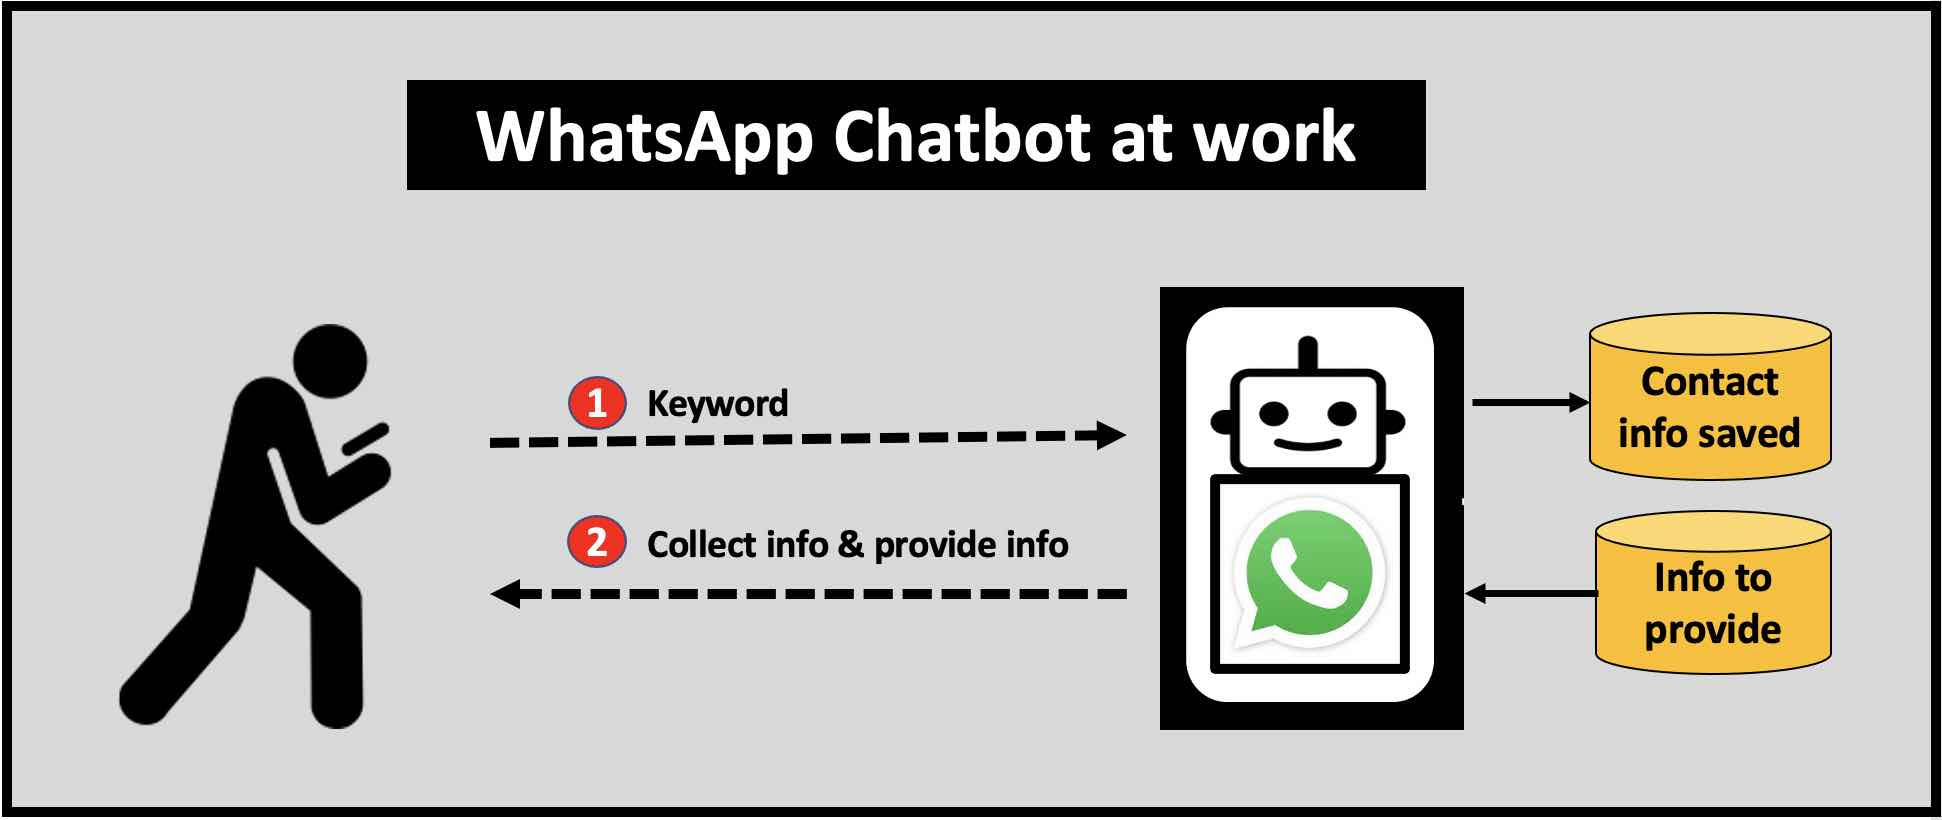 How WhatsApp chatbots work